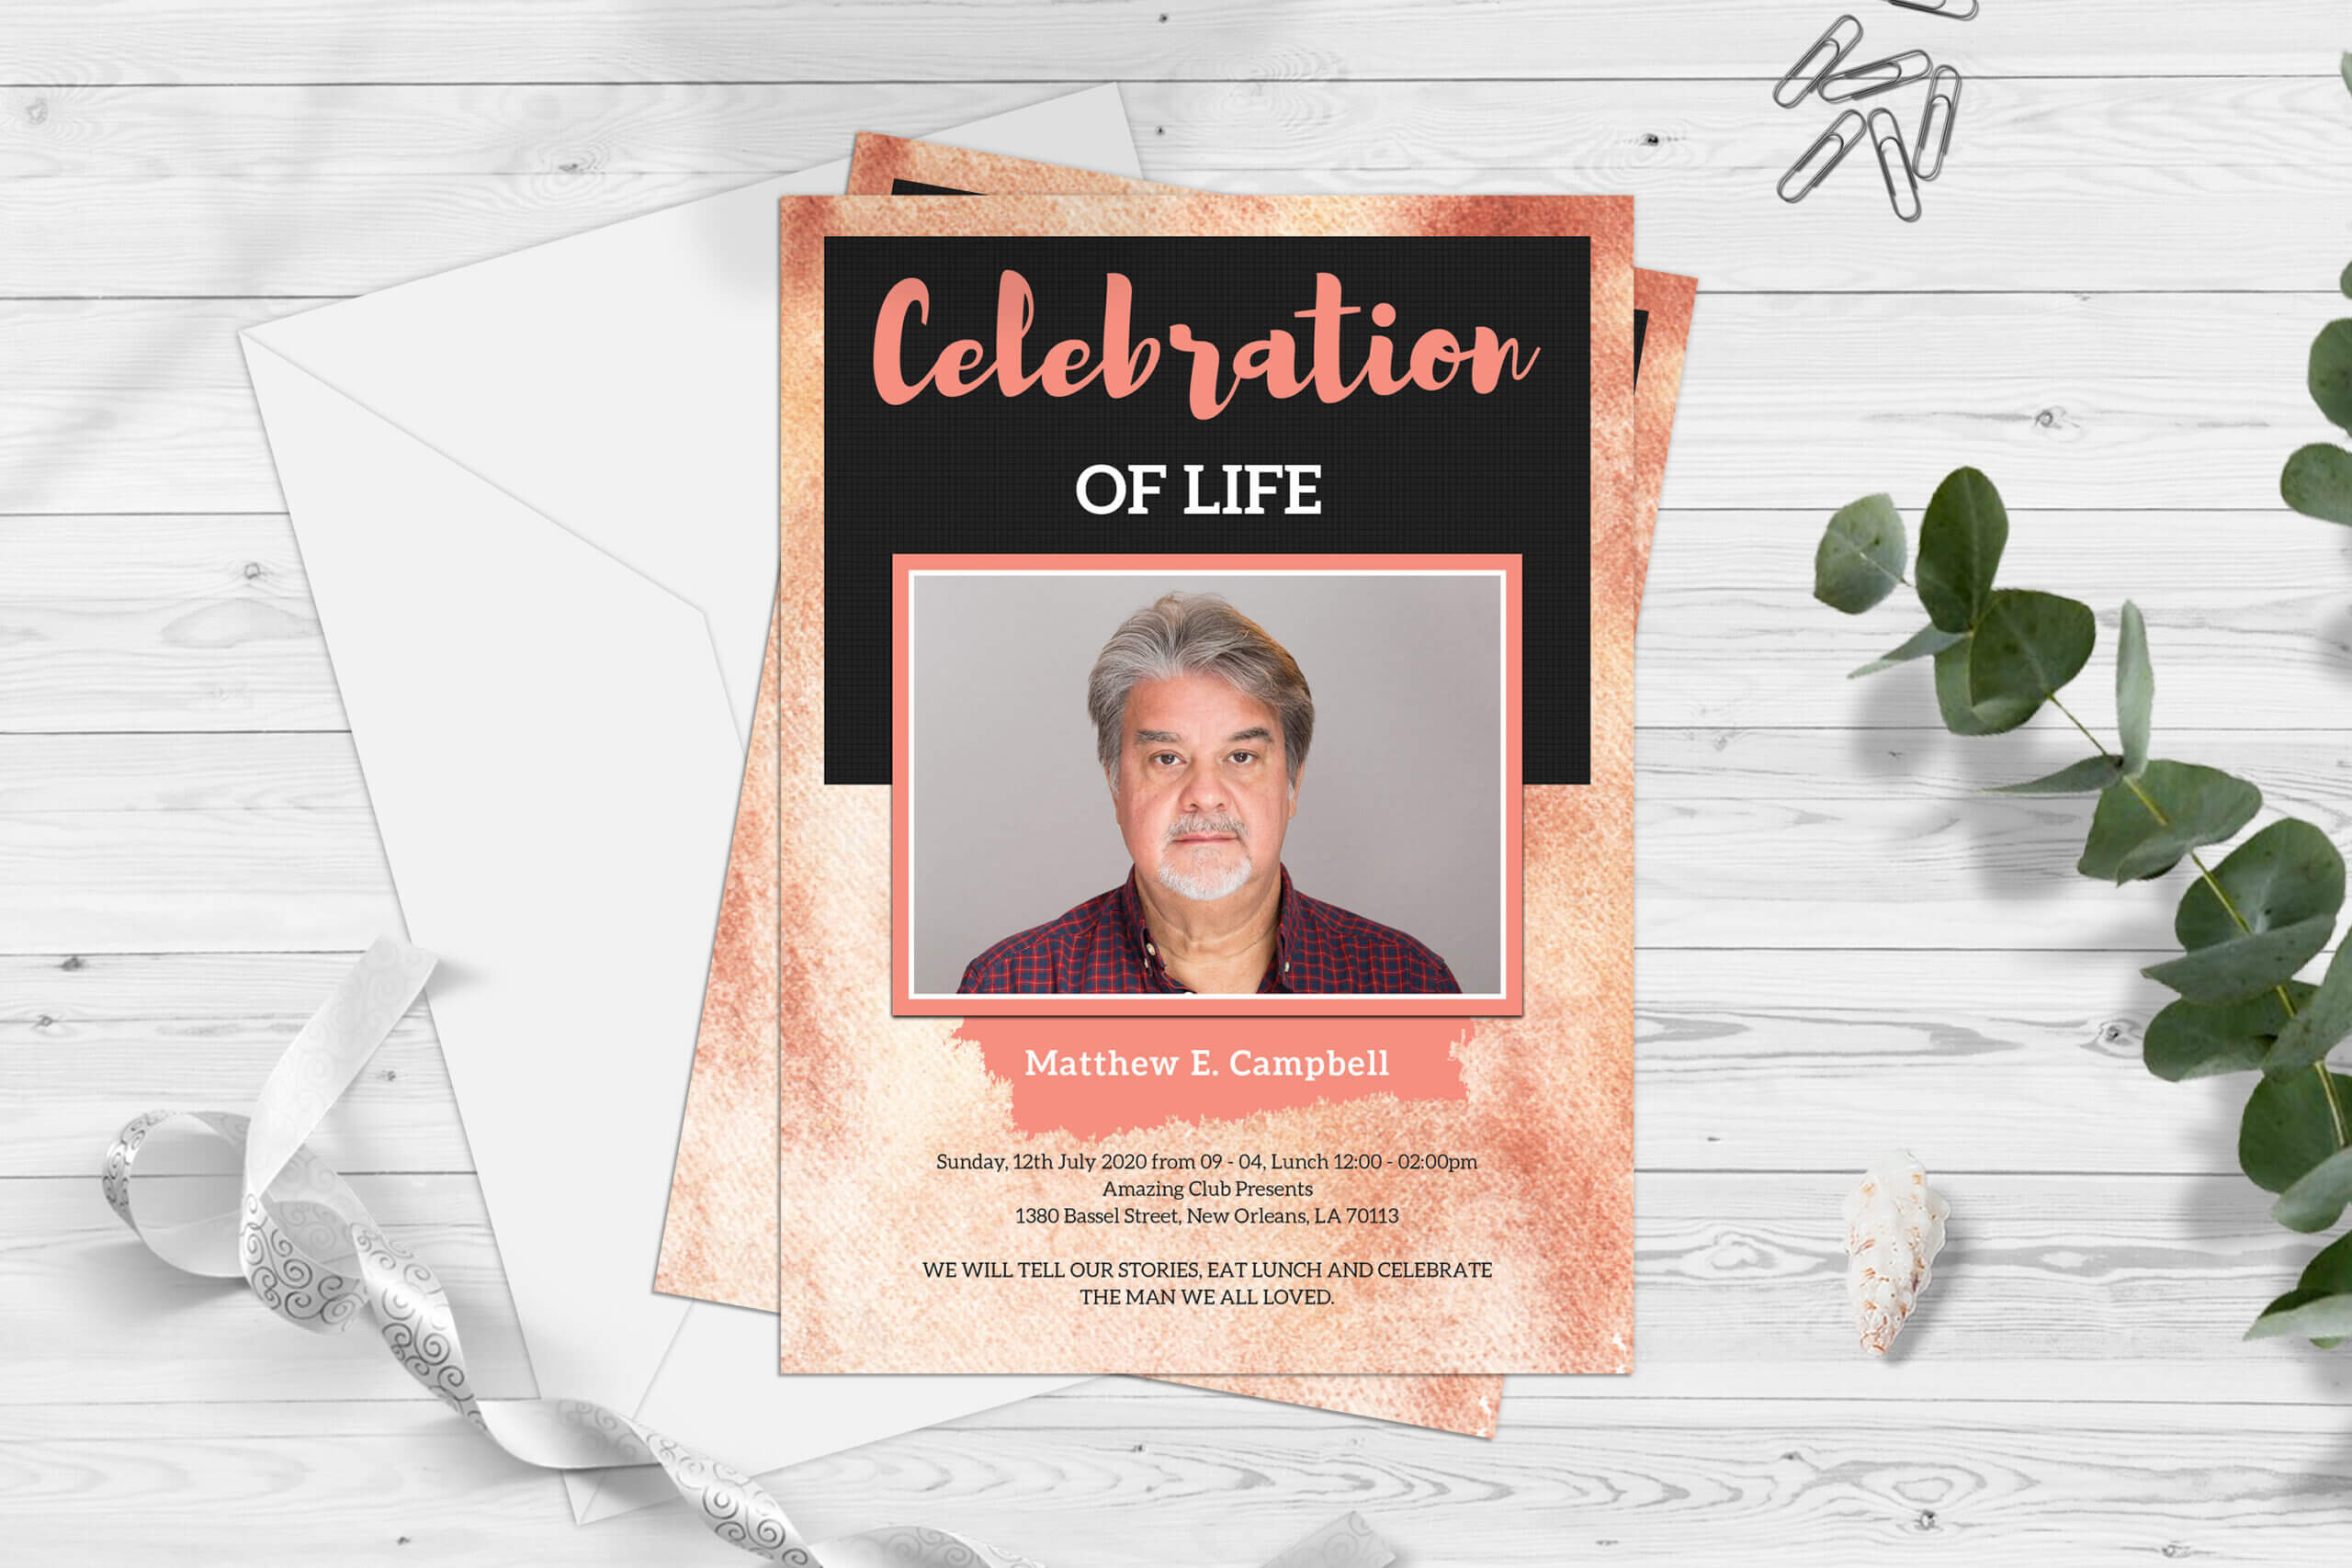 Celebration Of Life Funeral Program Invitation Card Template With Funeral Invitation Card Template